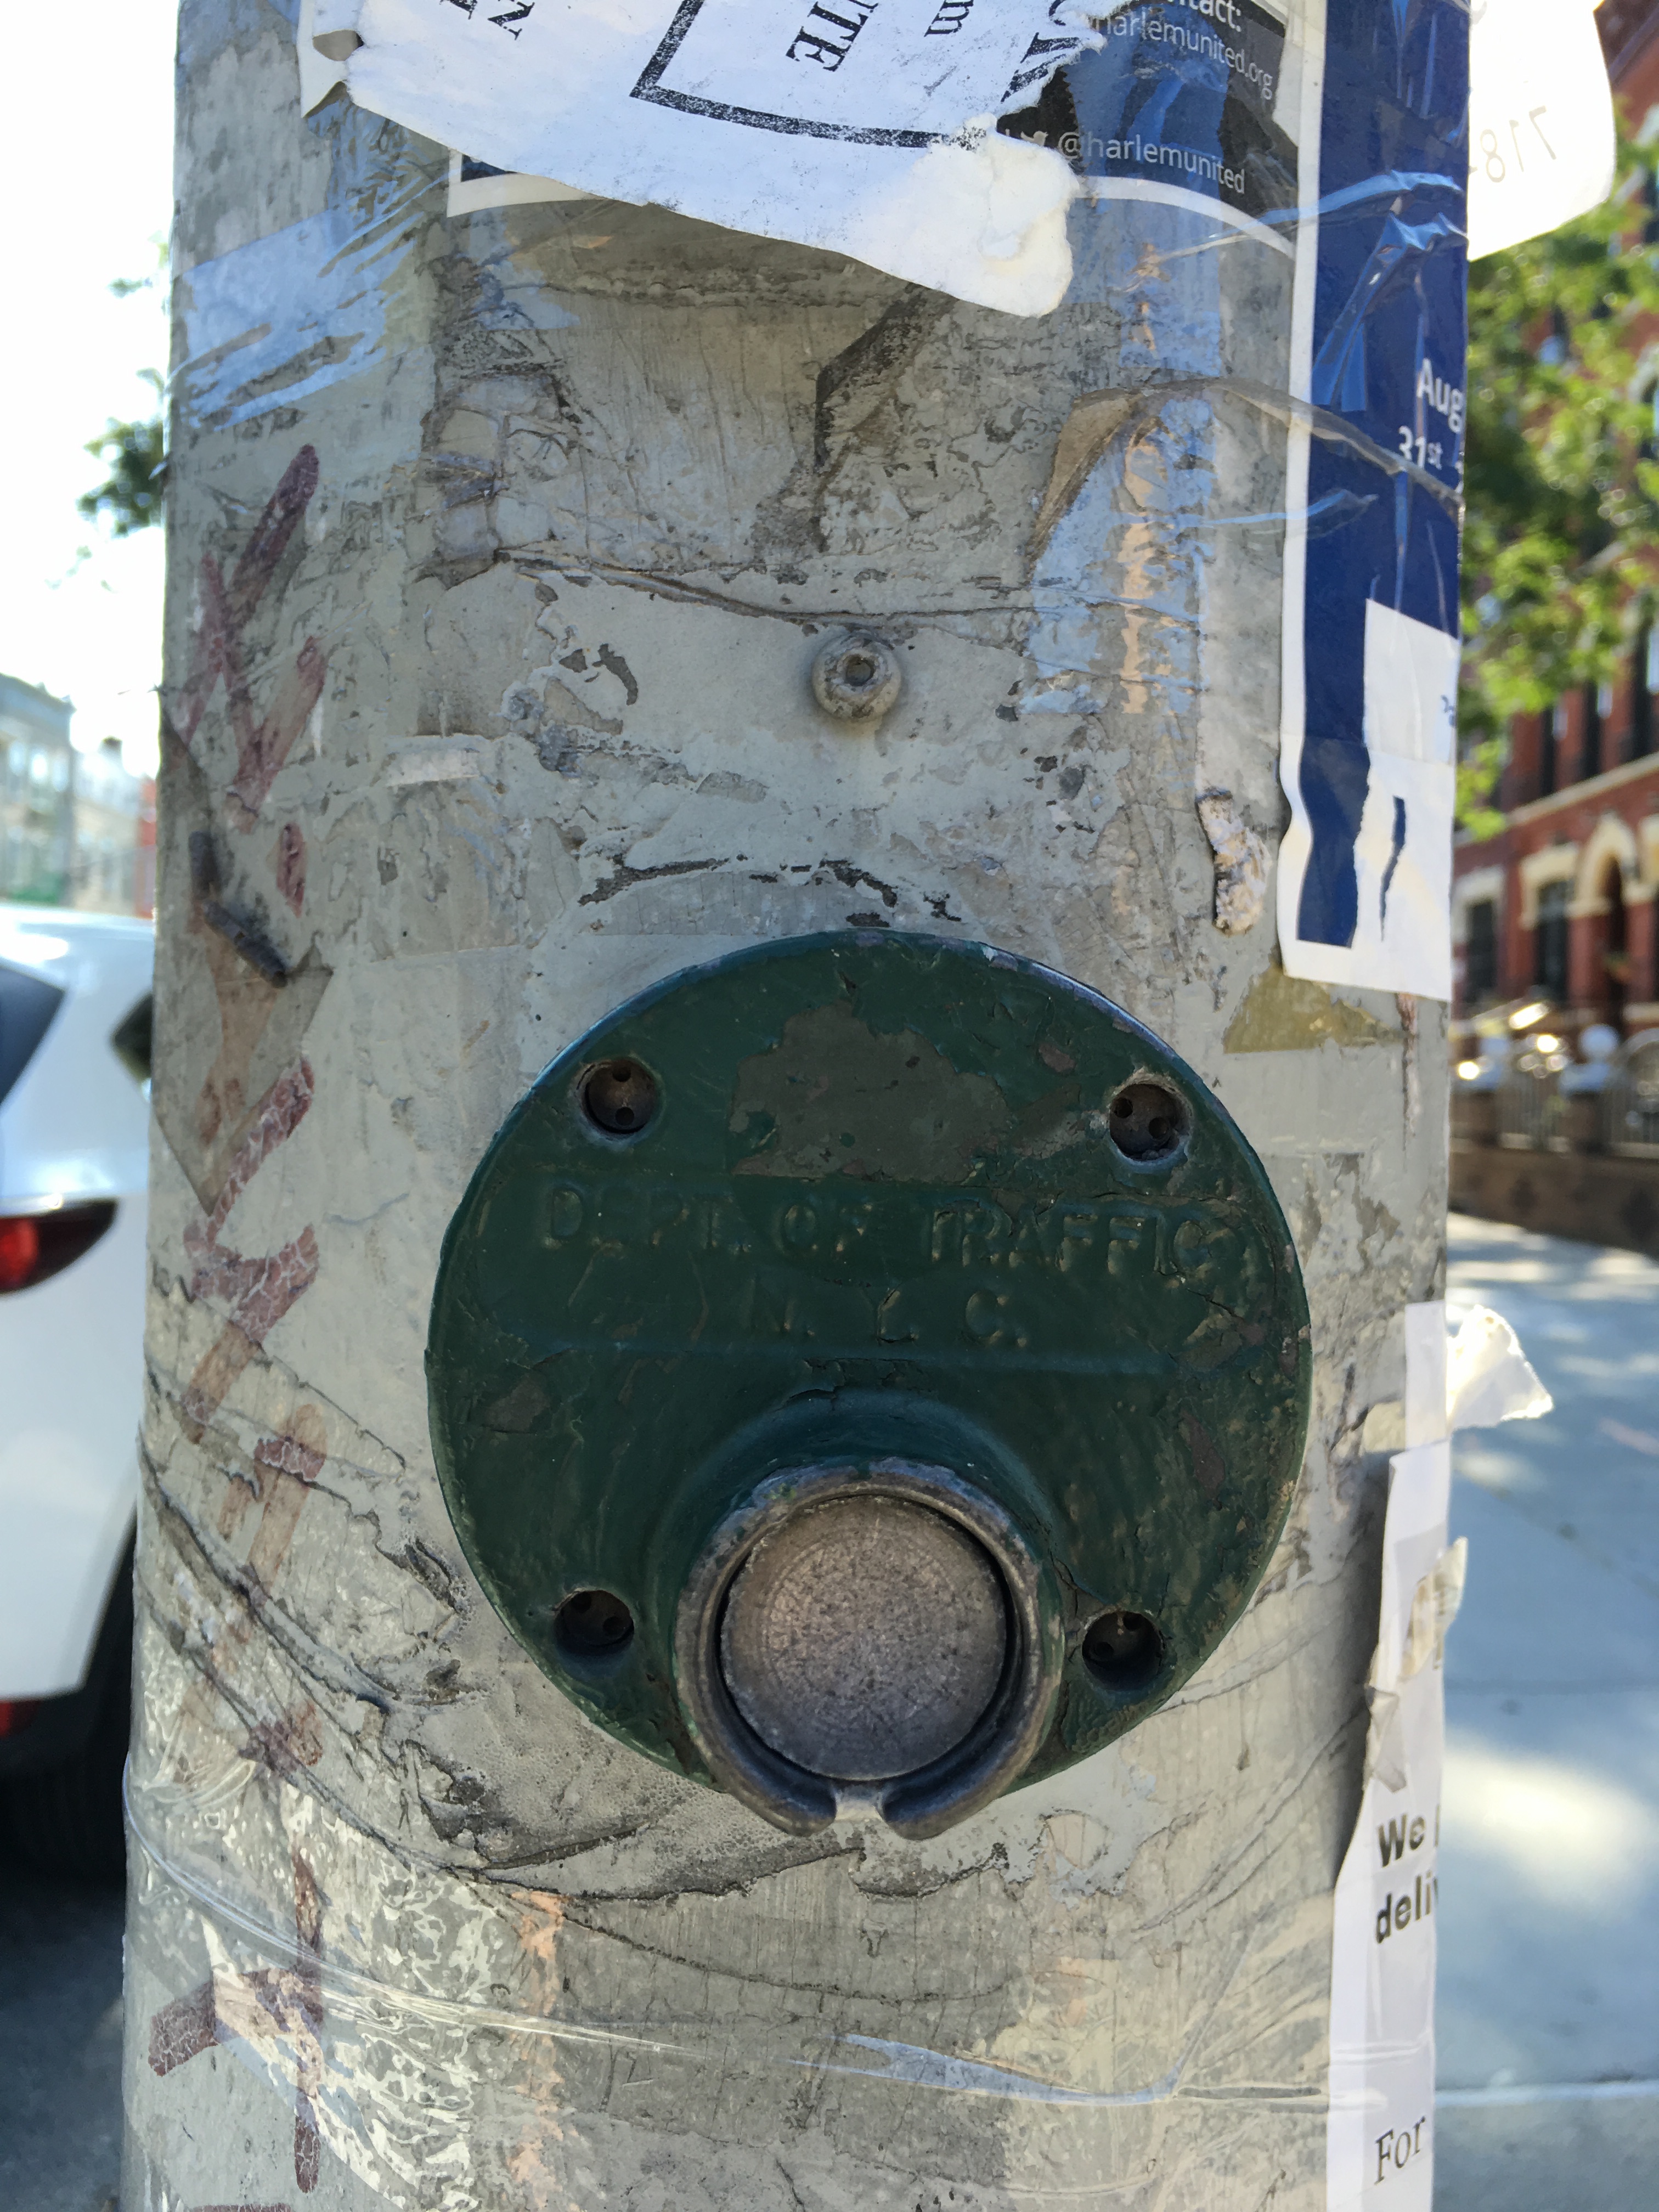 Crosswalk button at Bushwick Ave. and Kosciuszko street.